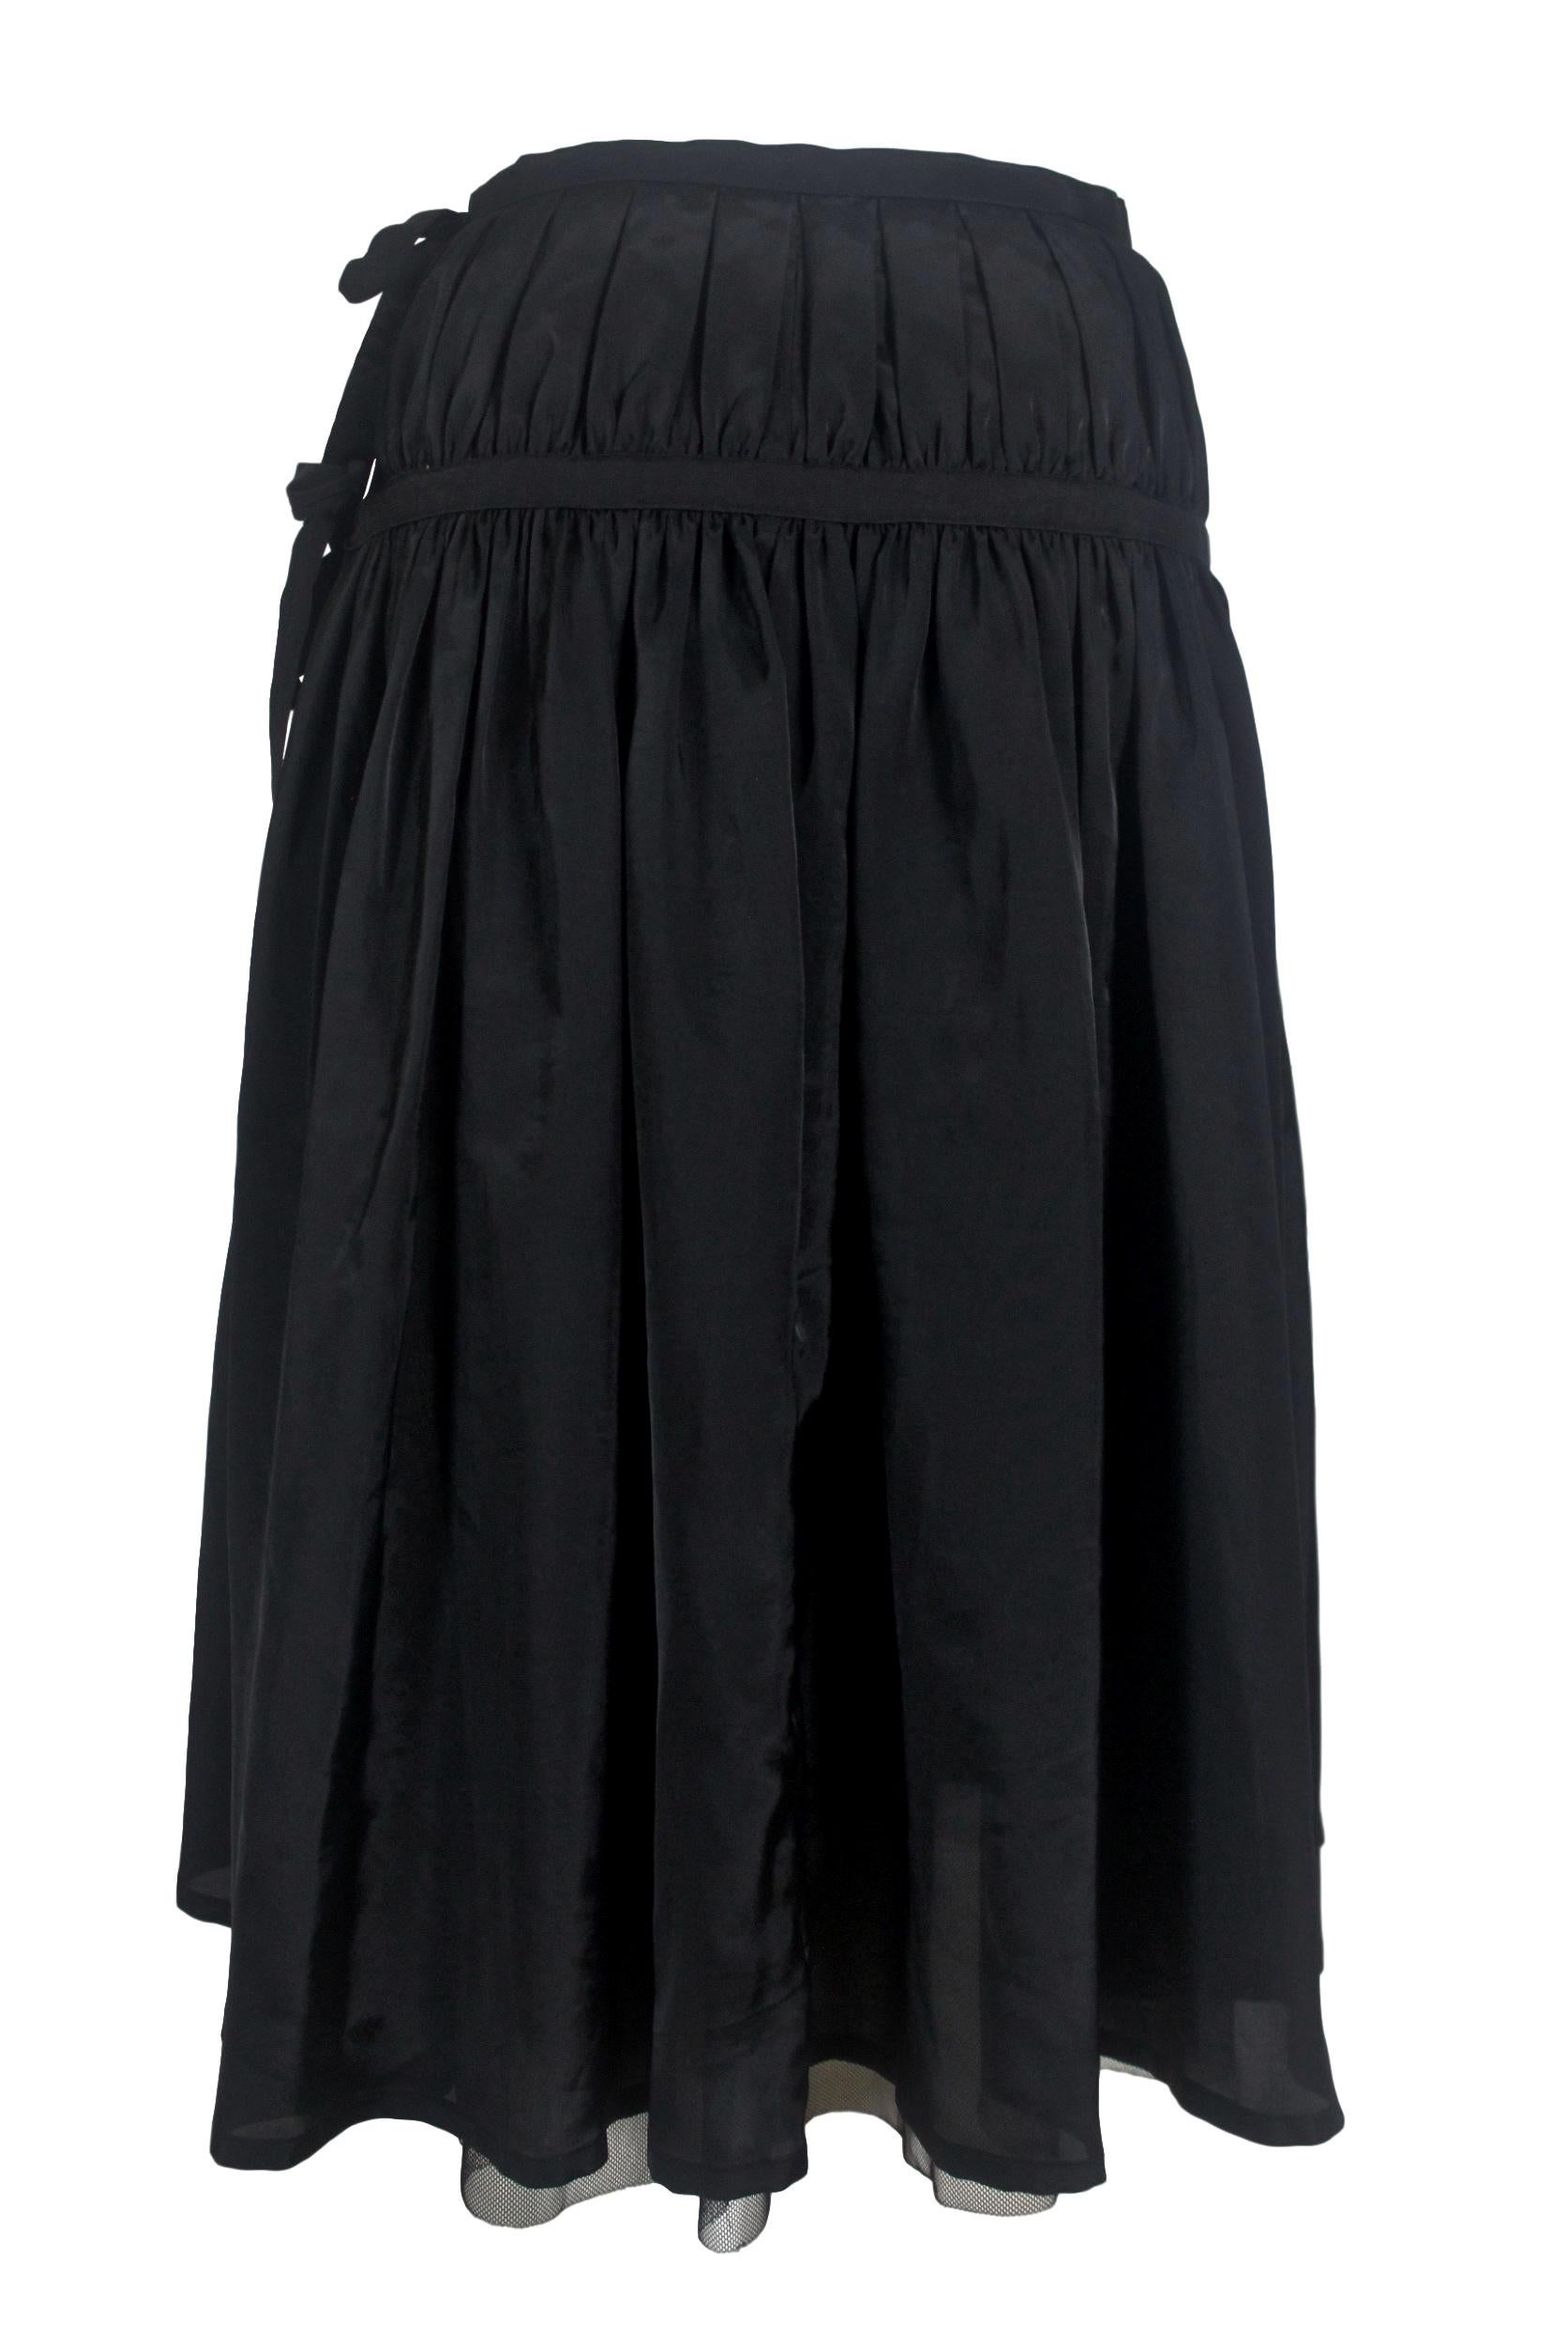 Comme des Garcons Tricot Double Layer Wrap Skirt 2007 For Sale 8